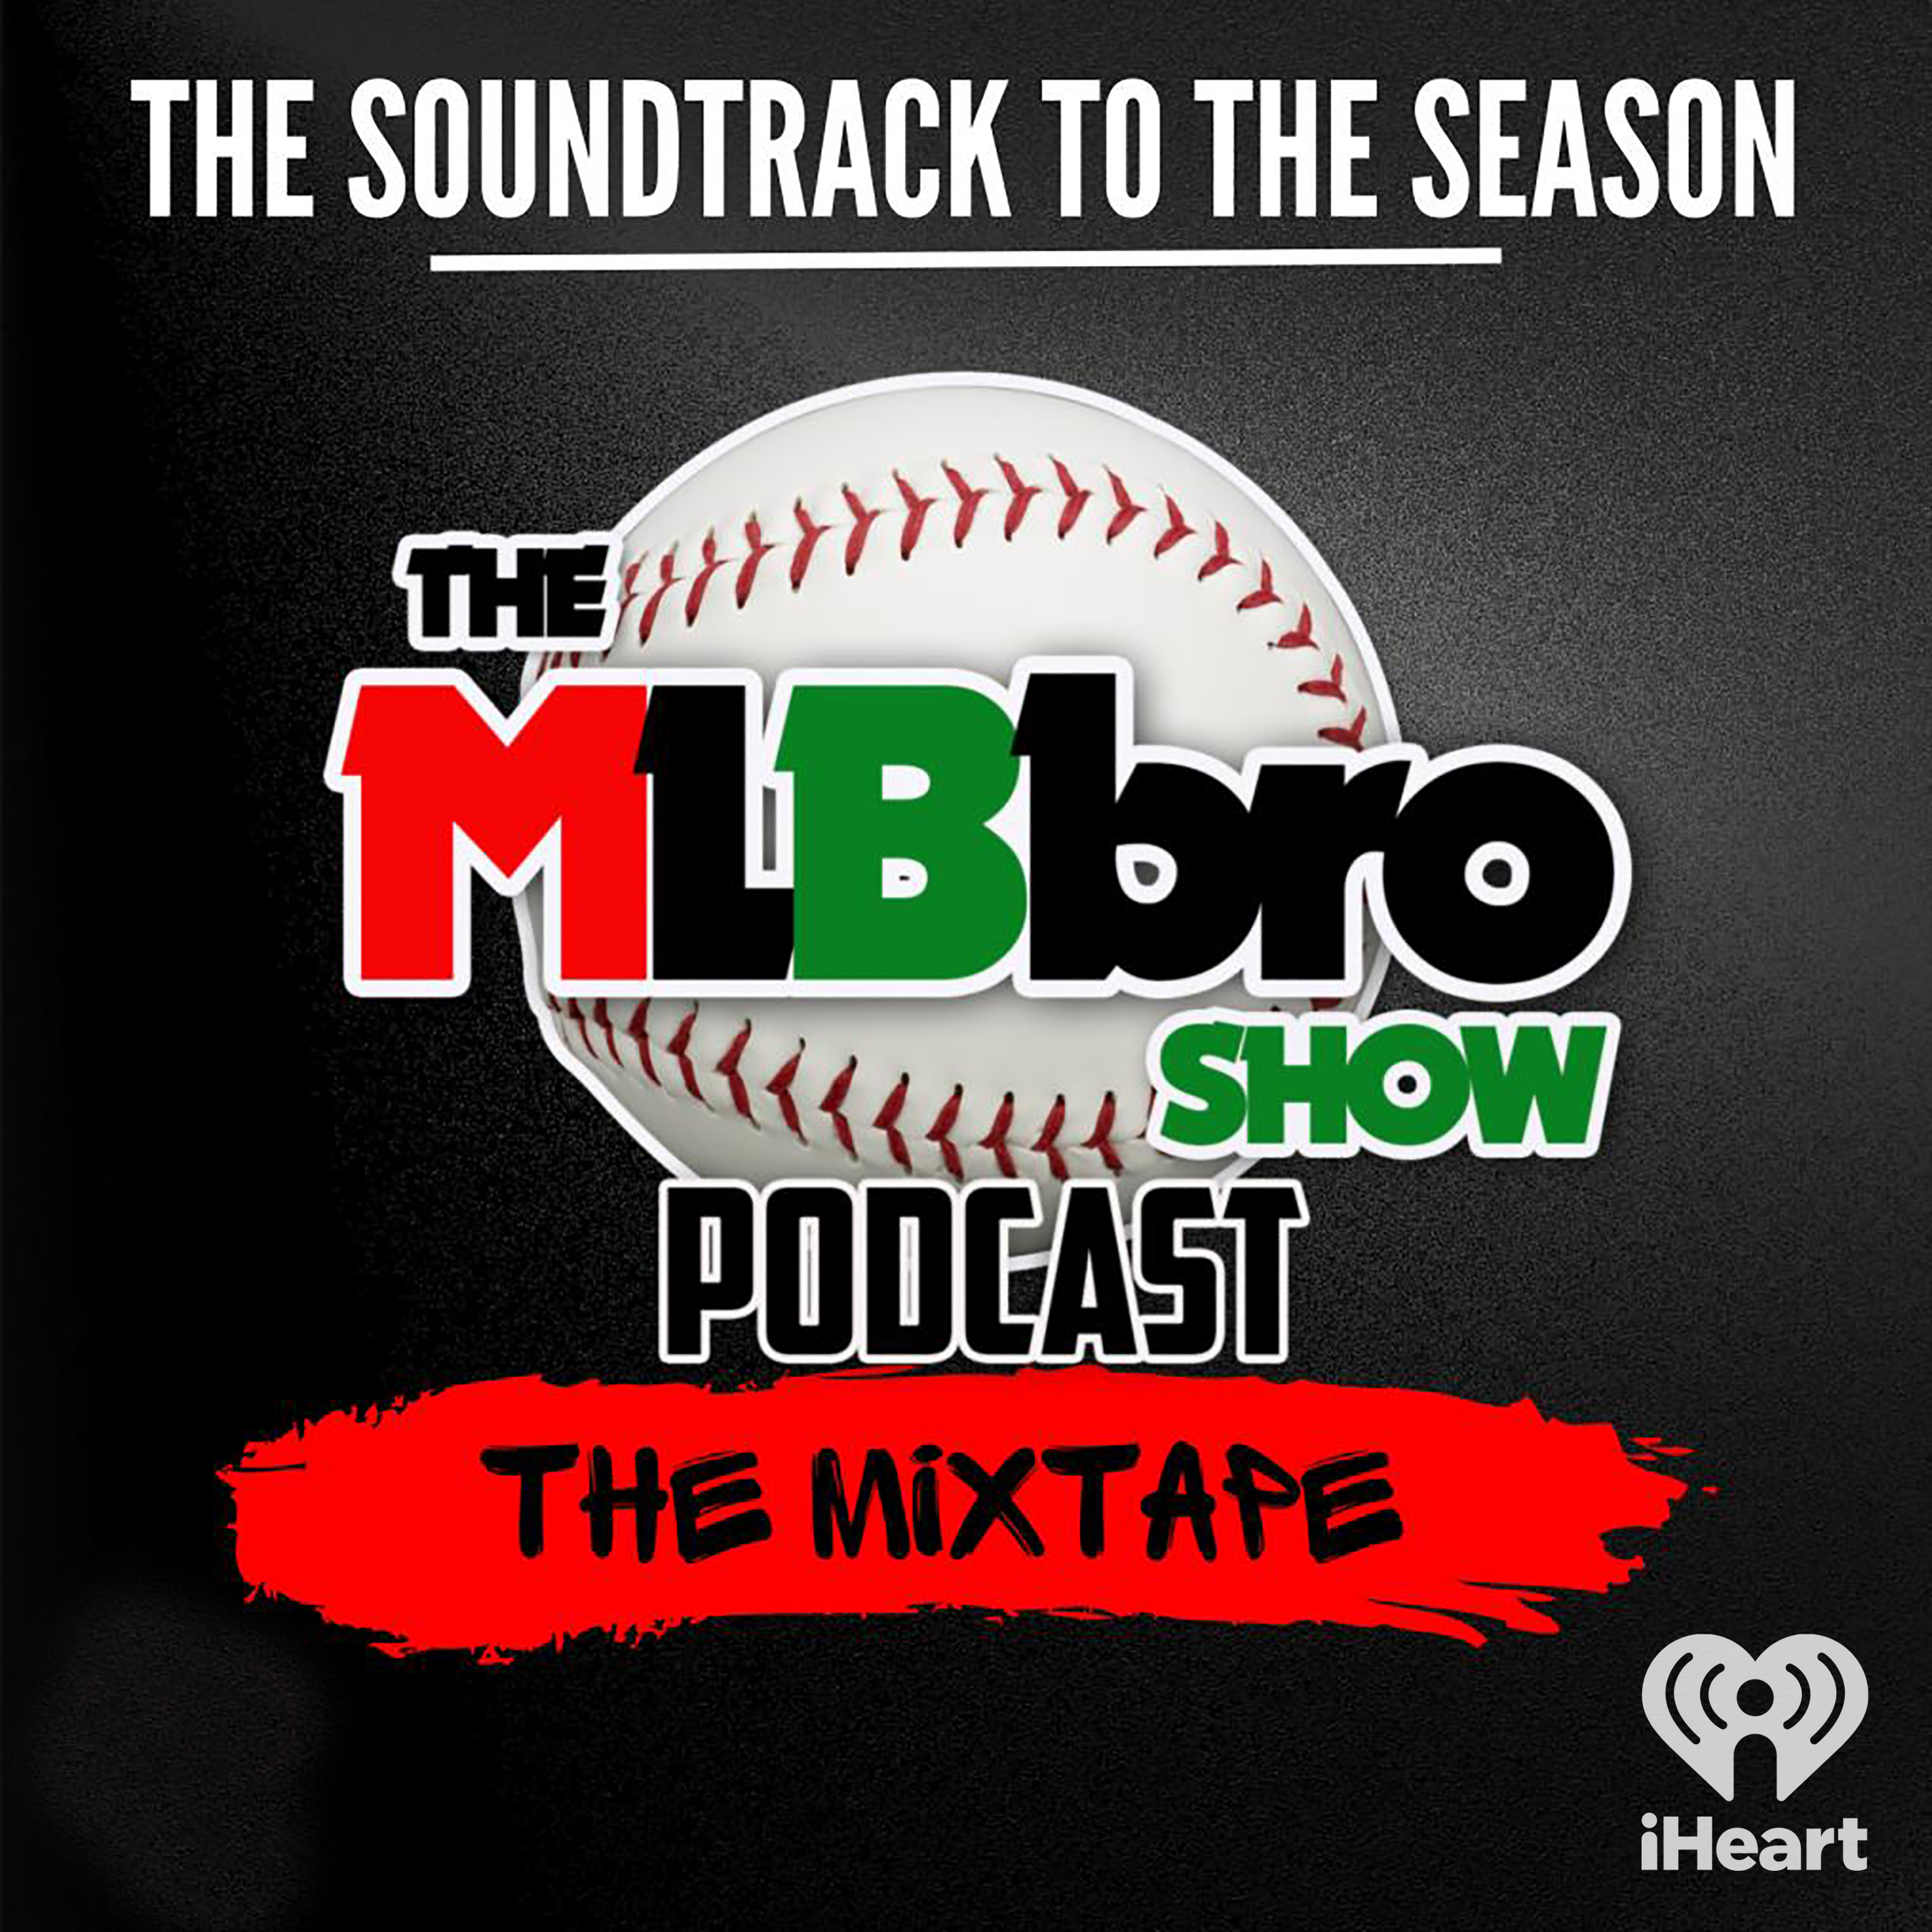 MLBbro Show Podcast The Mixtape Vol 4 Episode 3